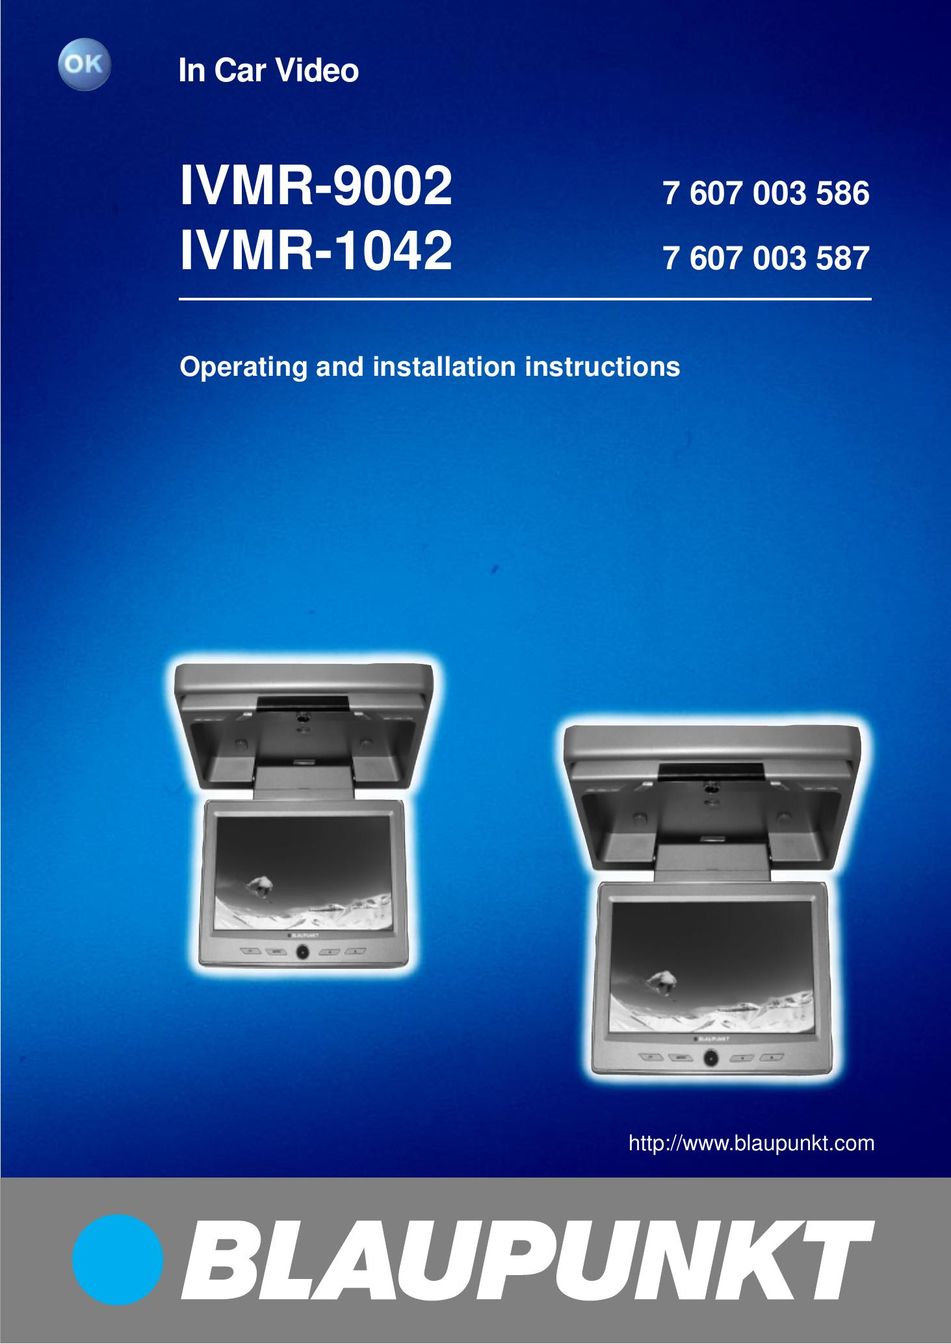 Blaupunkt IVMR-1042 Car Video System User Manual